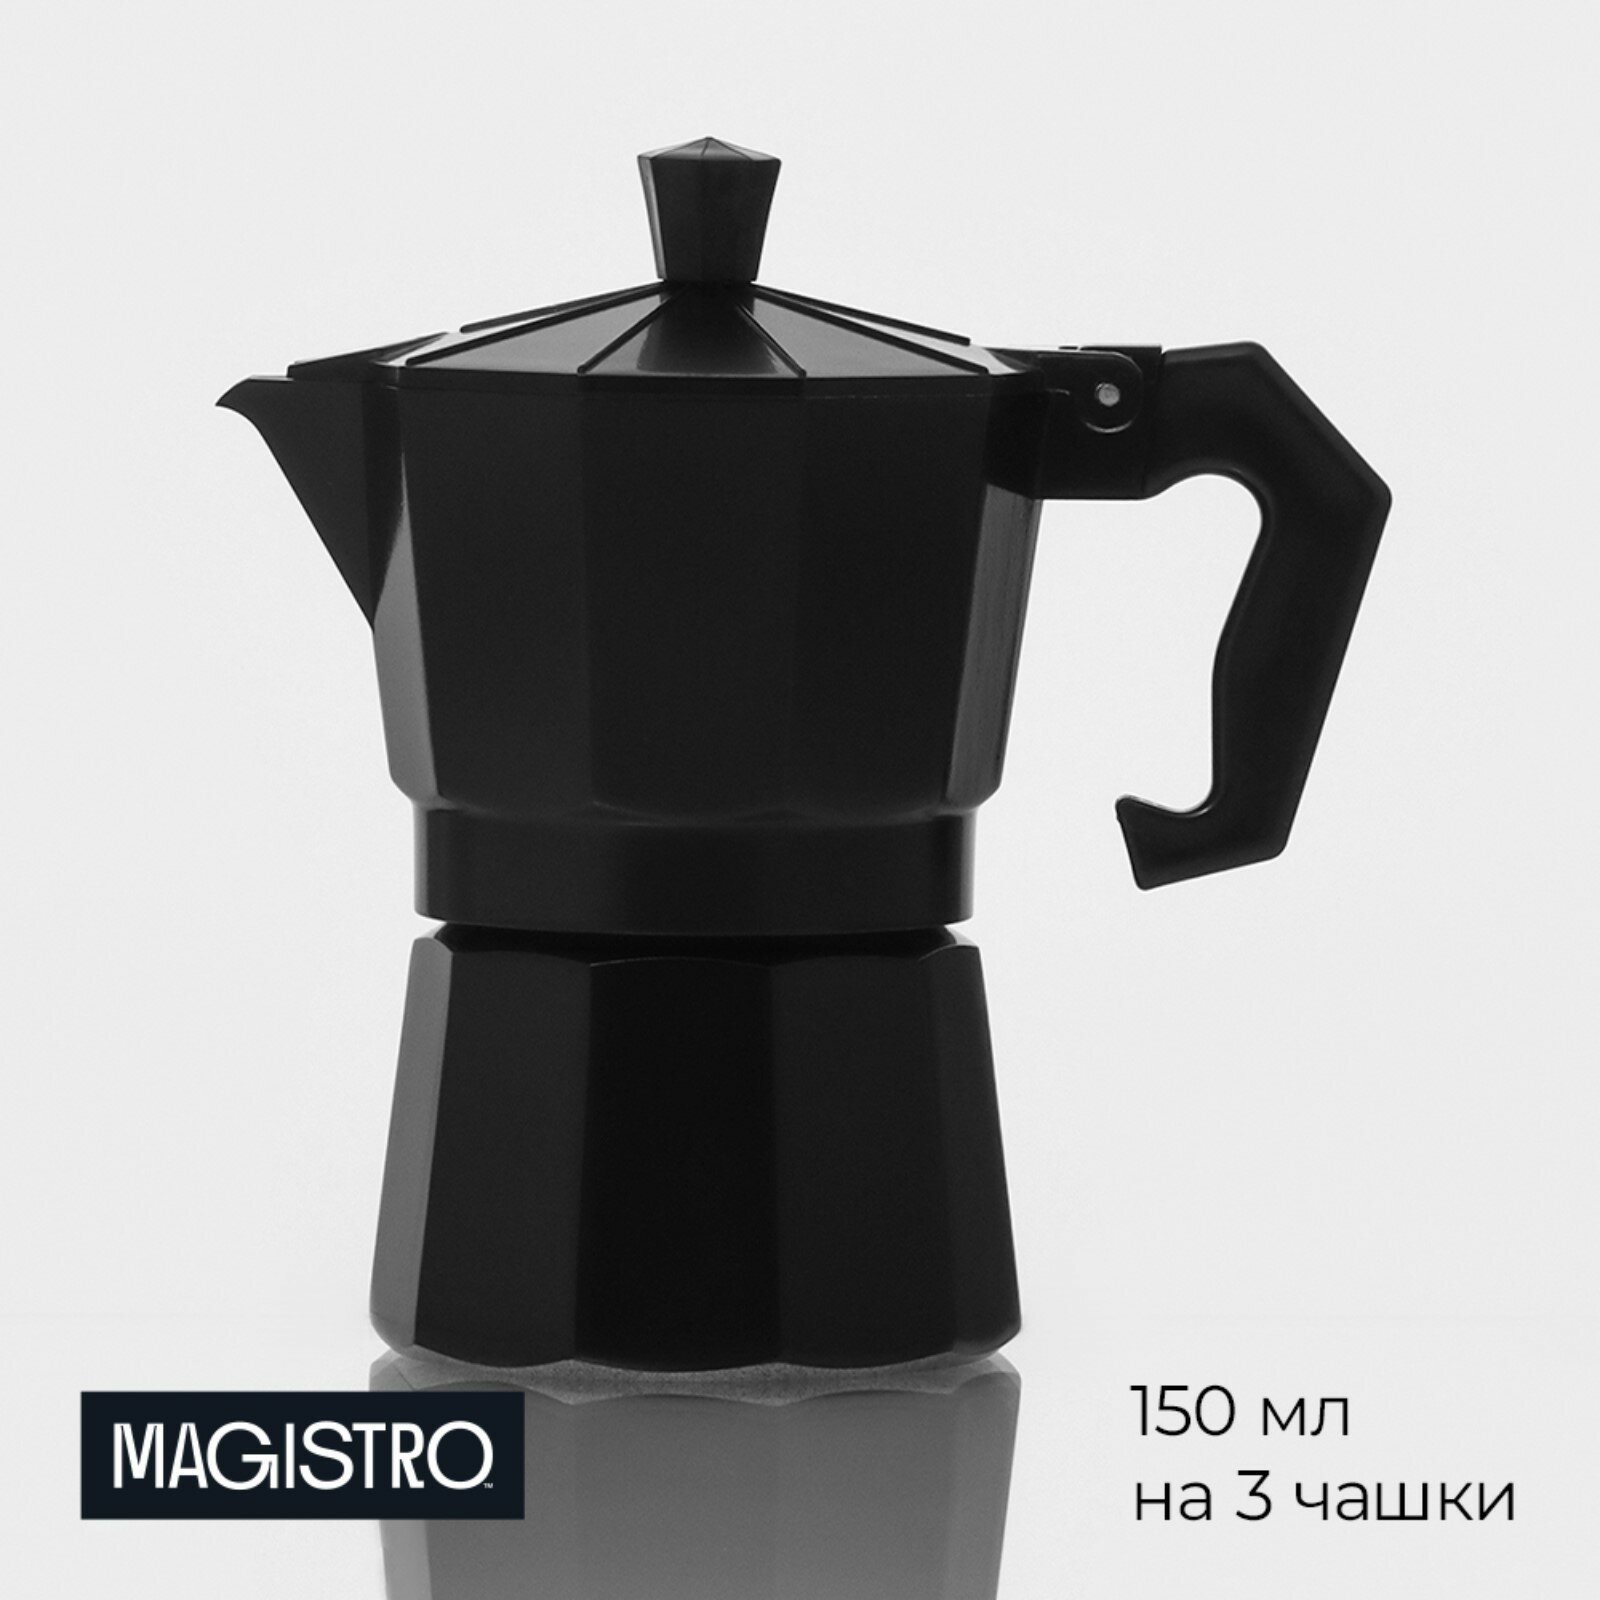 Magistro Кофеварка гейзерная Magistro Alum black, на 3 чашки, 150 мл